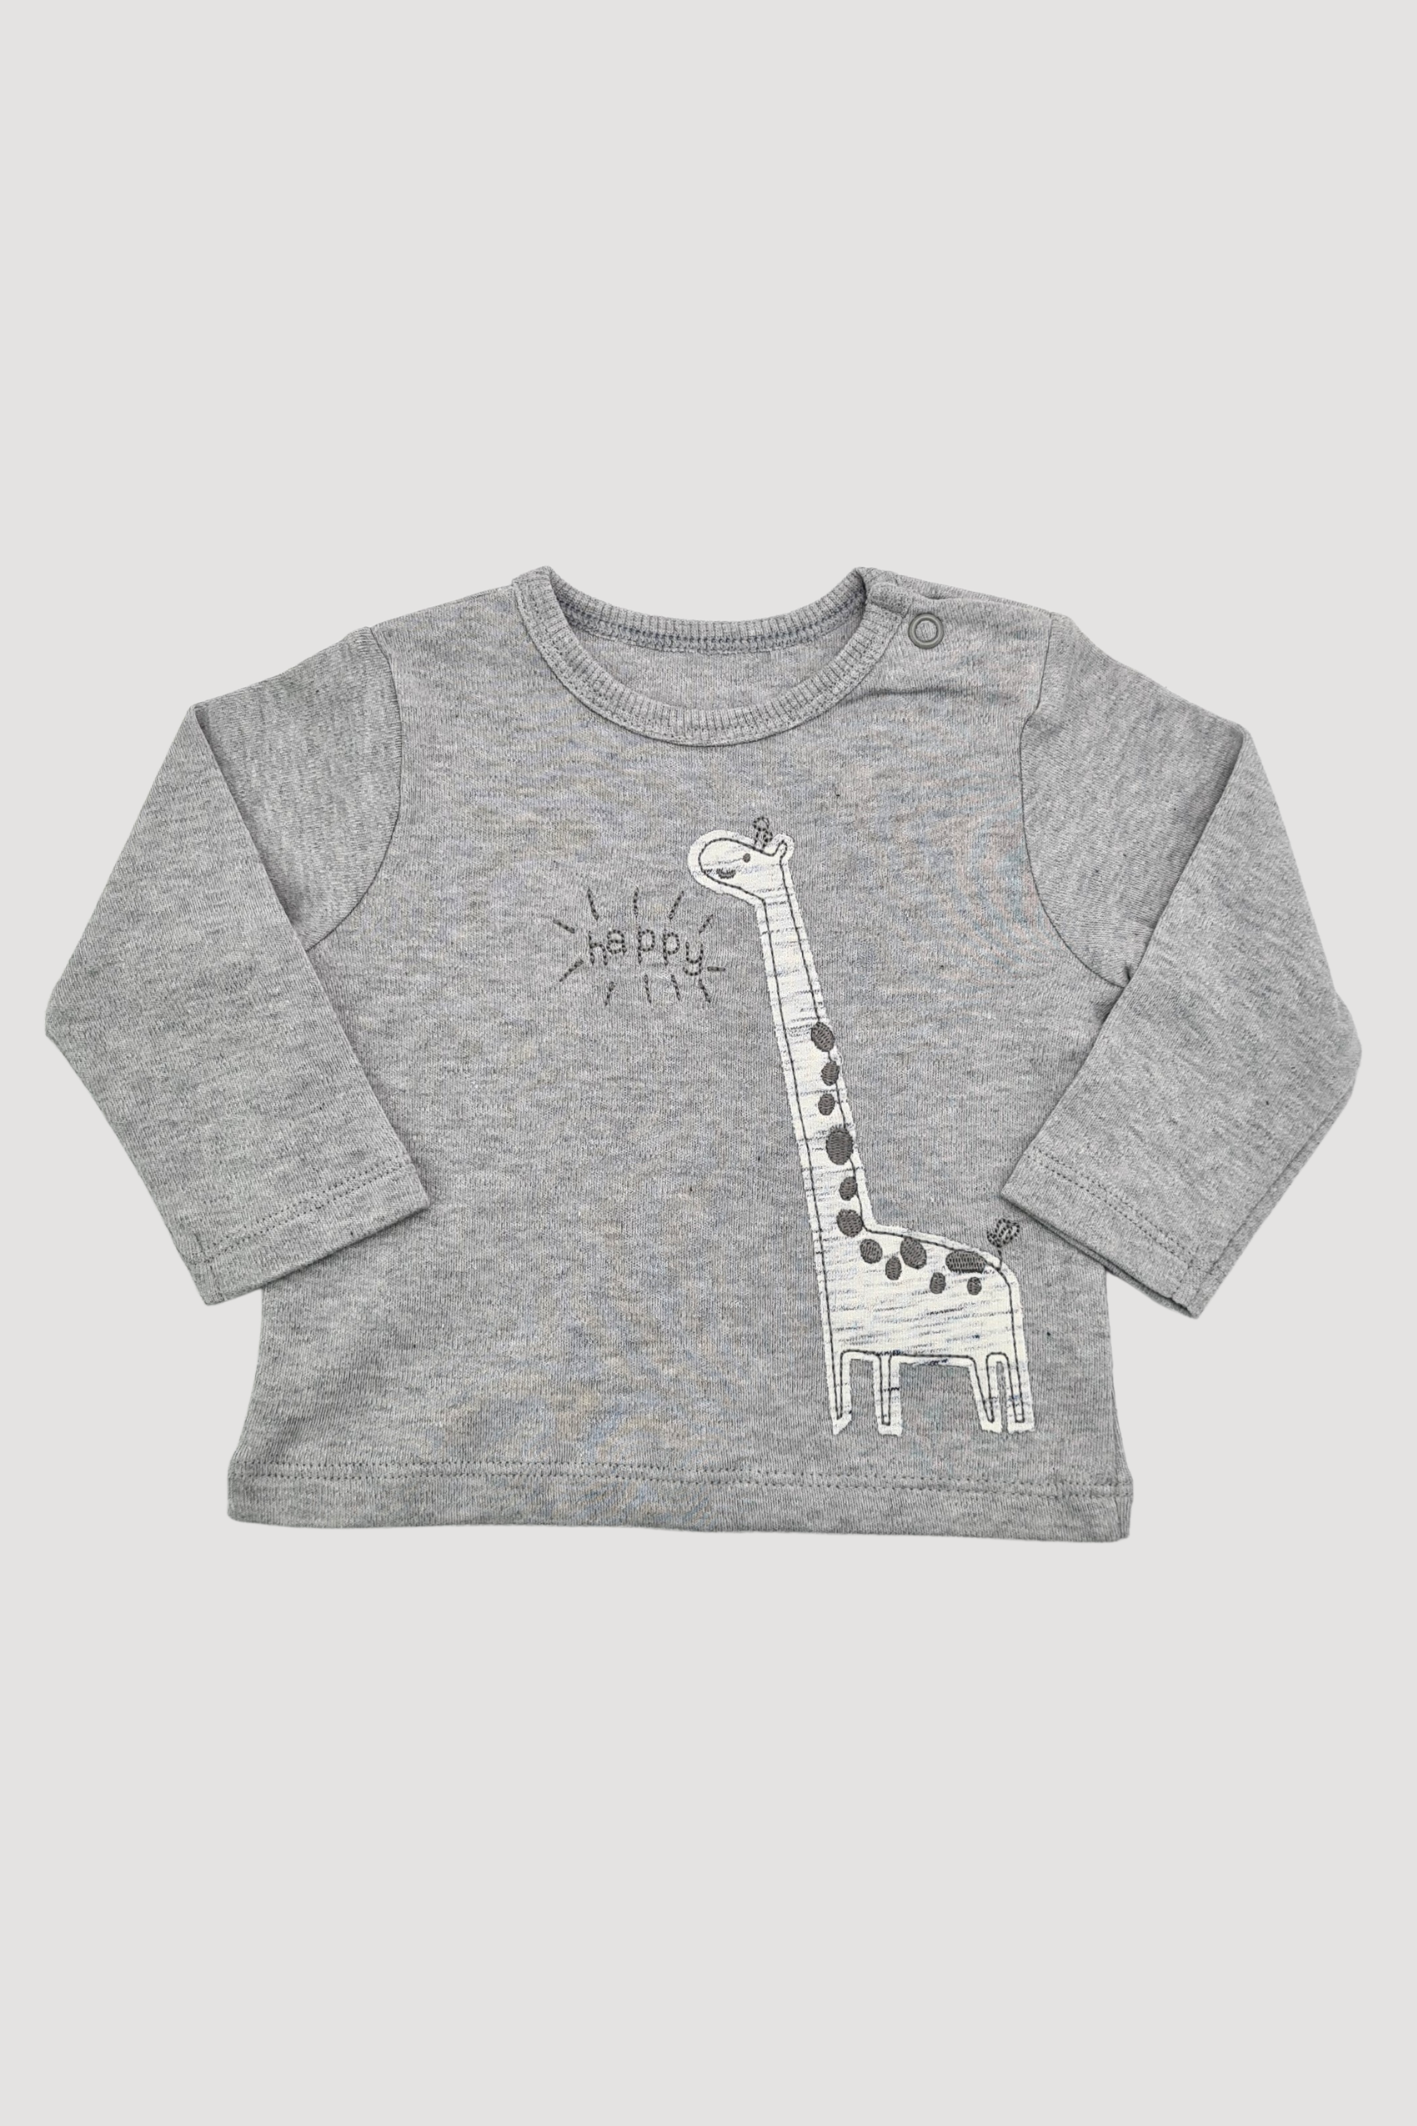 0-3 mois - T-shirt girafe 'Happy' (M &amp; Co.)